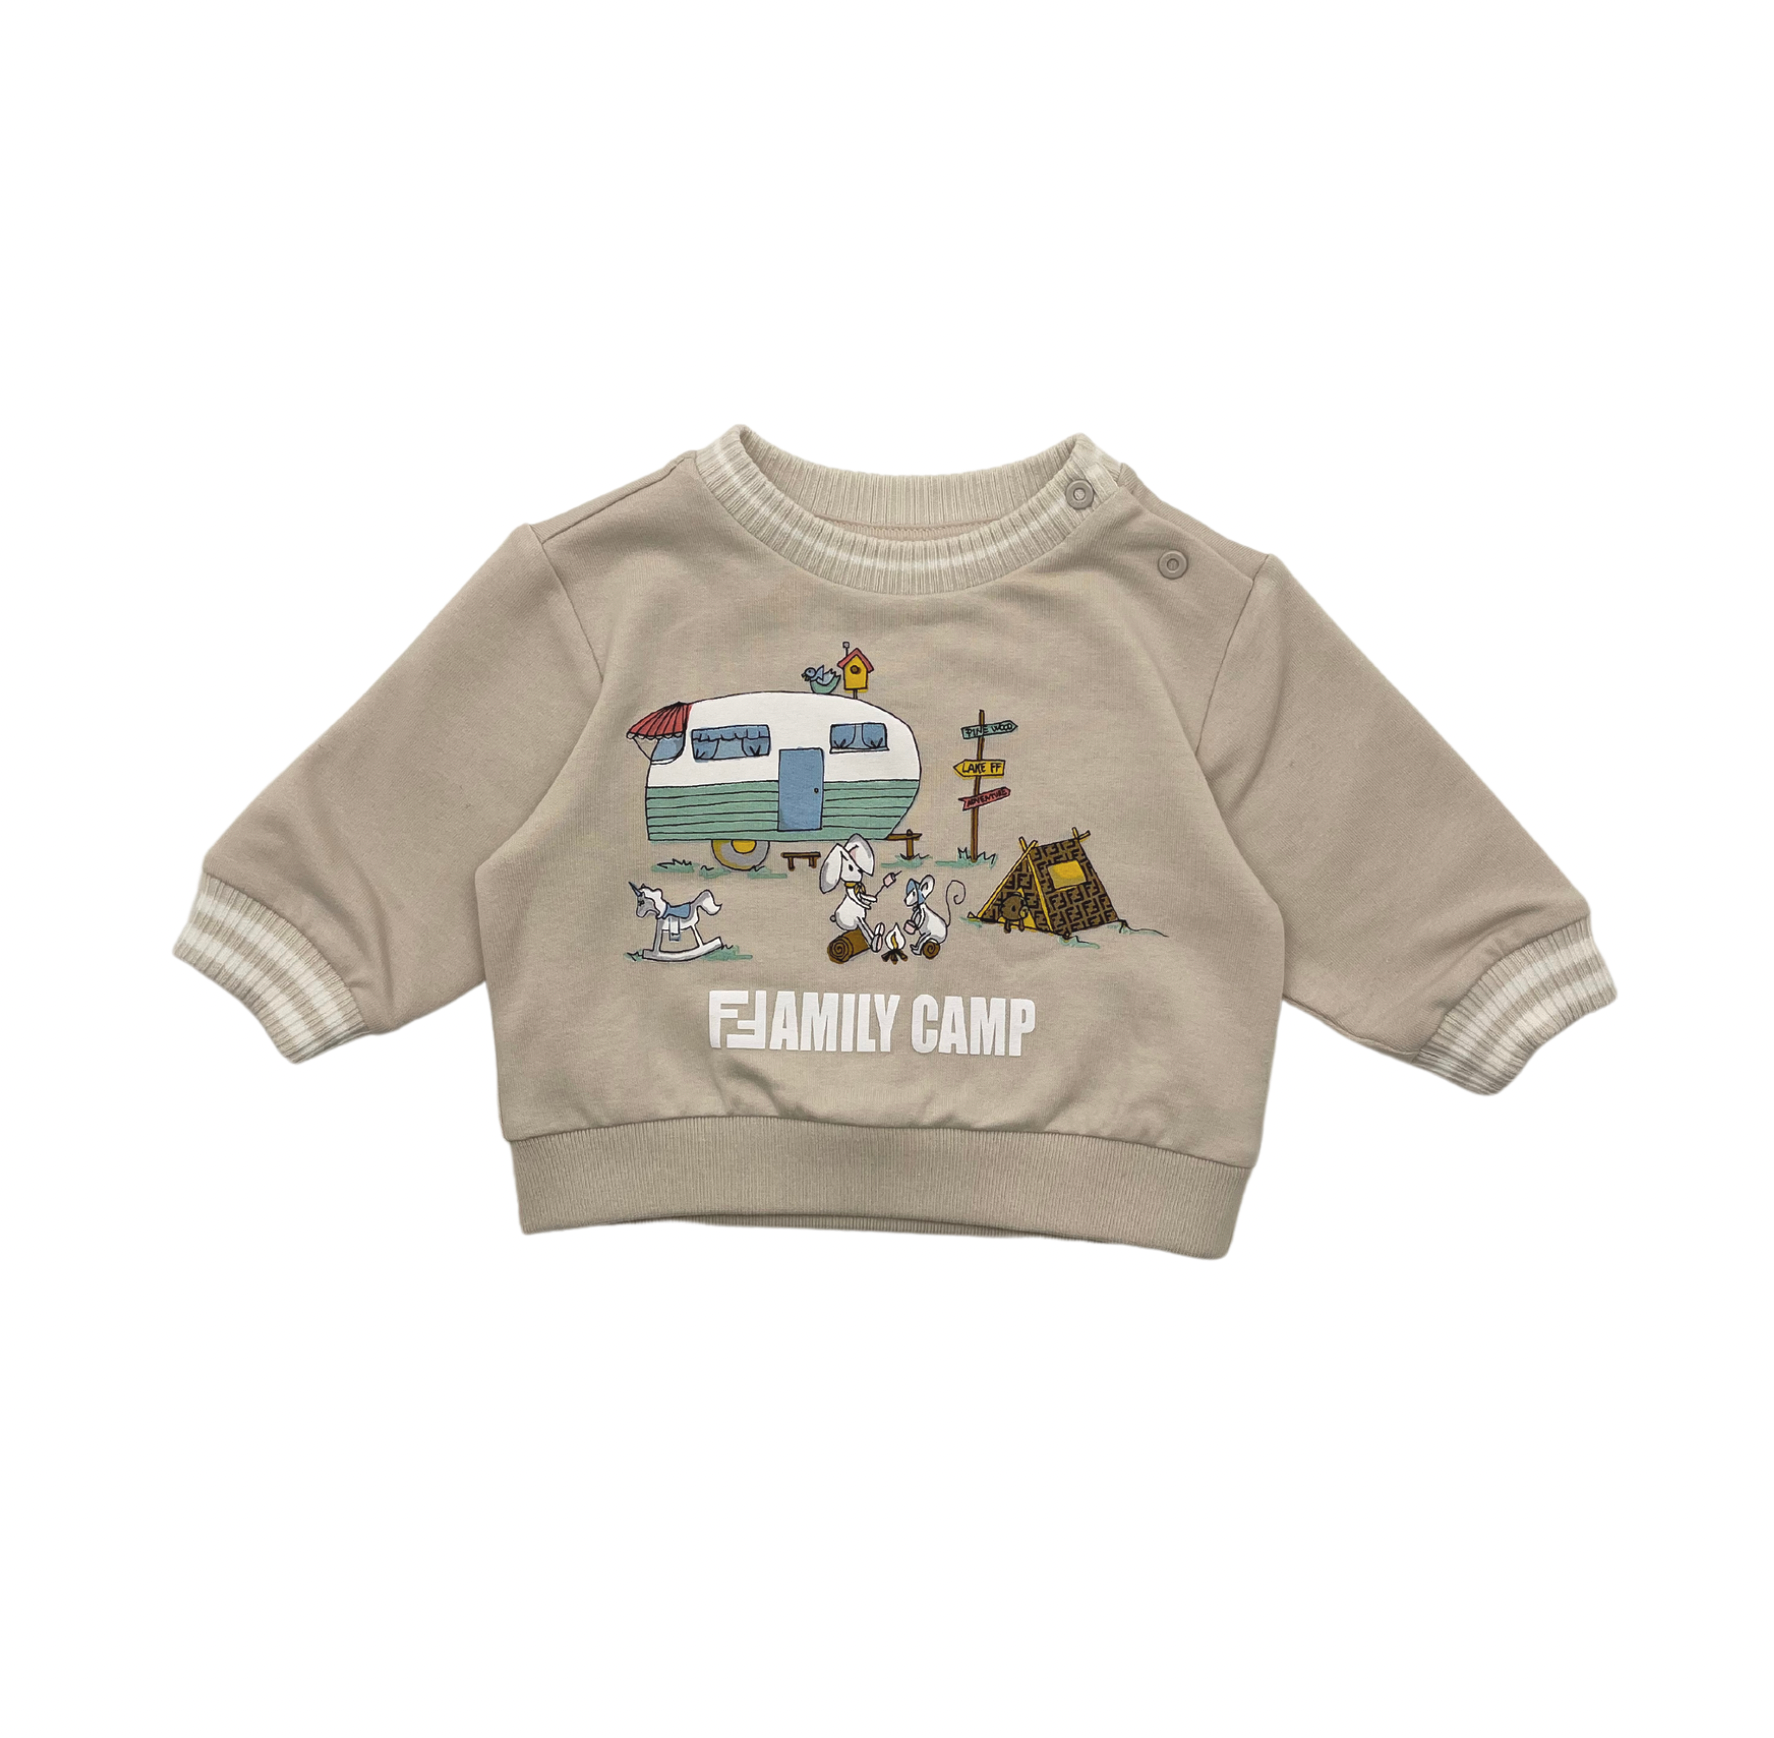 FENDI - "Family camp" sweatshirt - 3 months